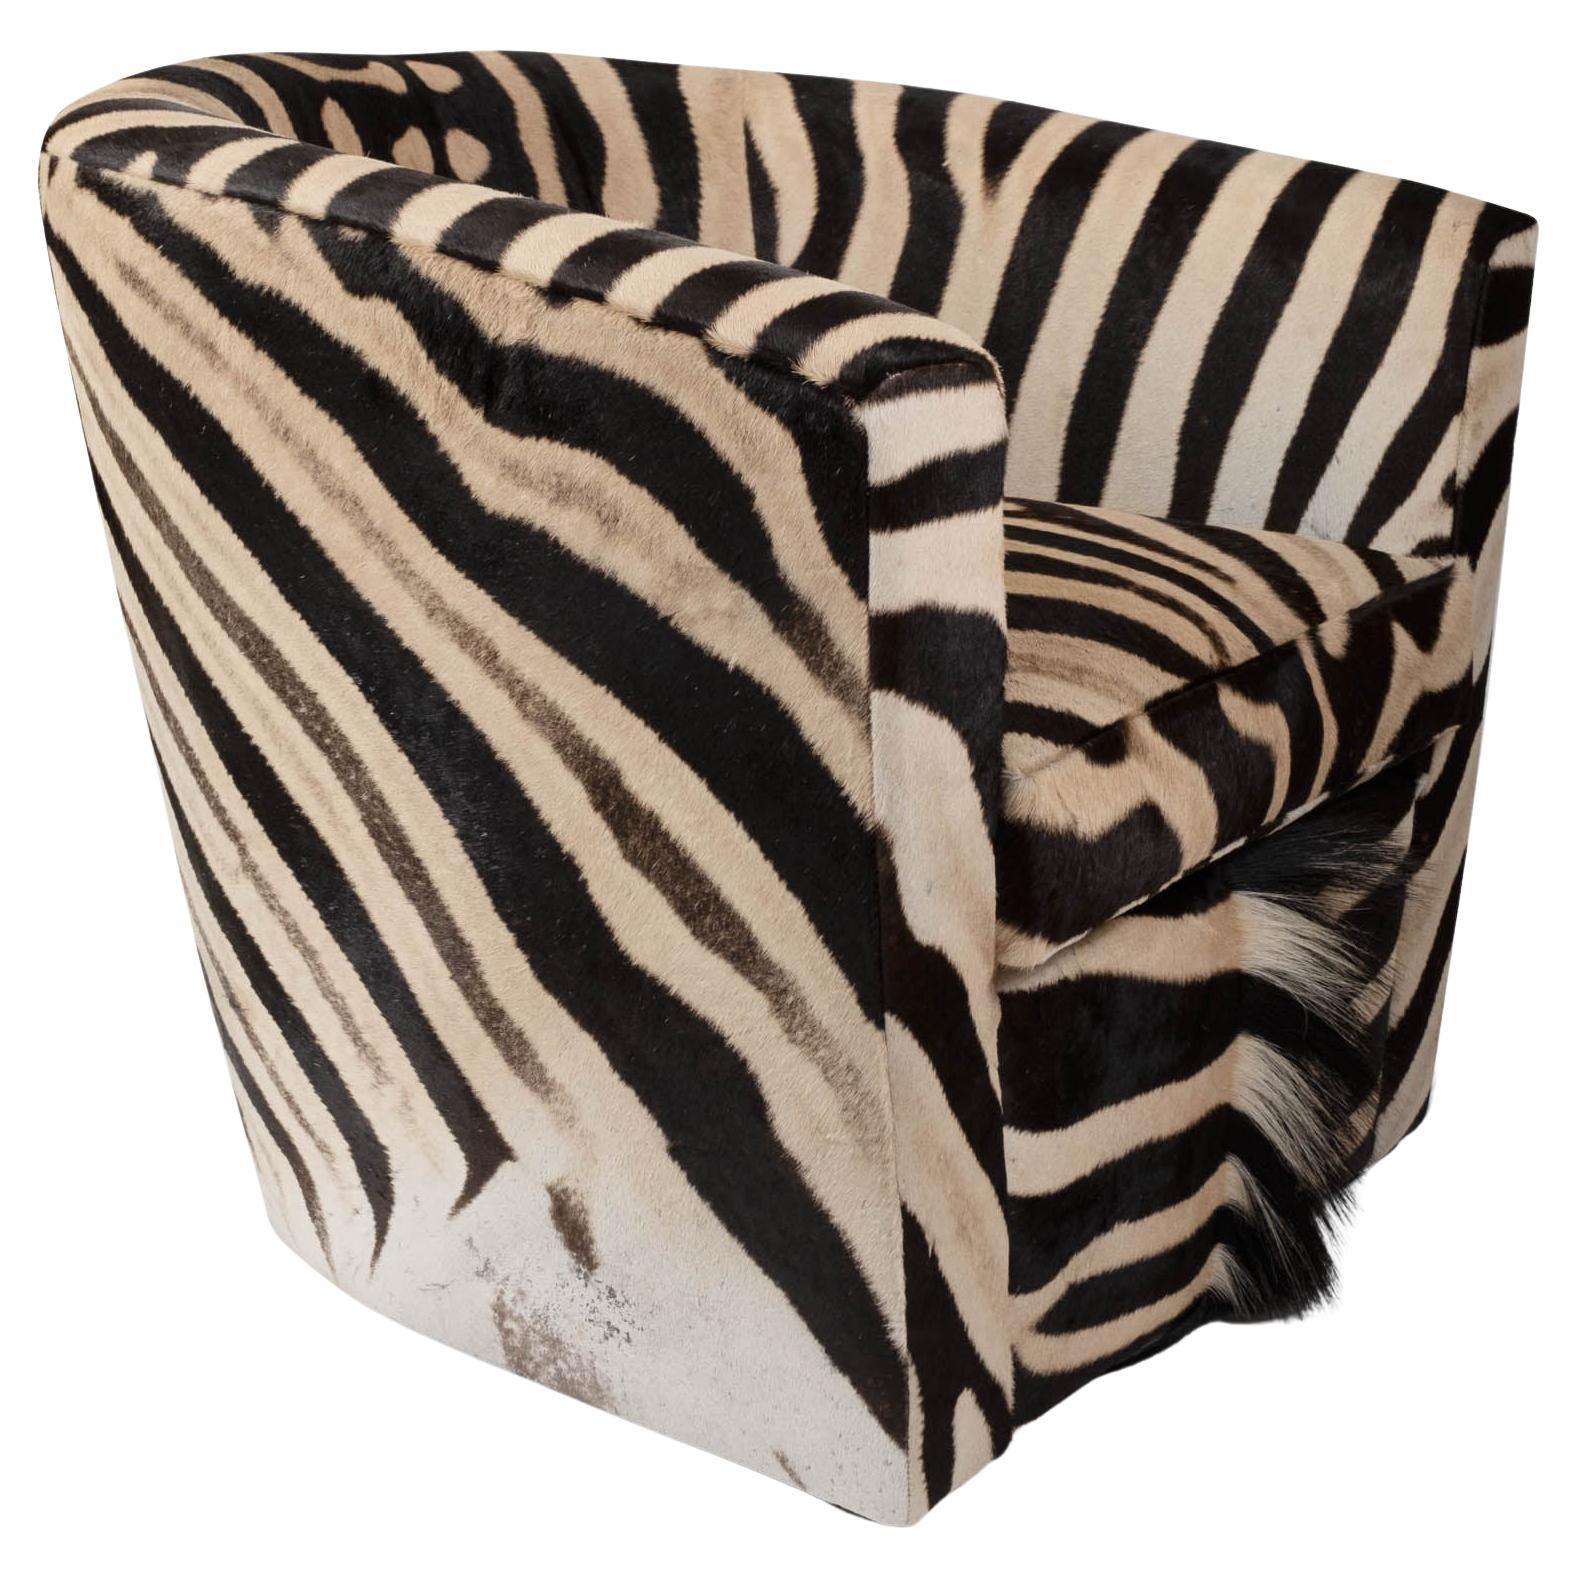 Tub Chair - Zebra Hide For Sale